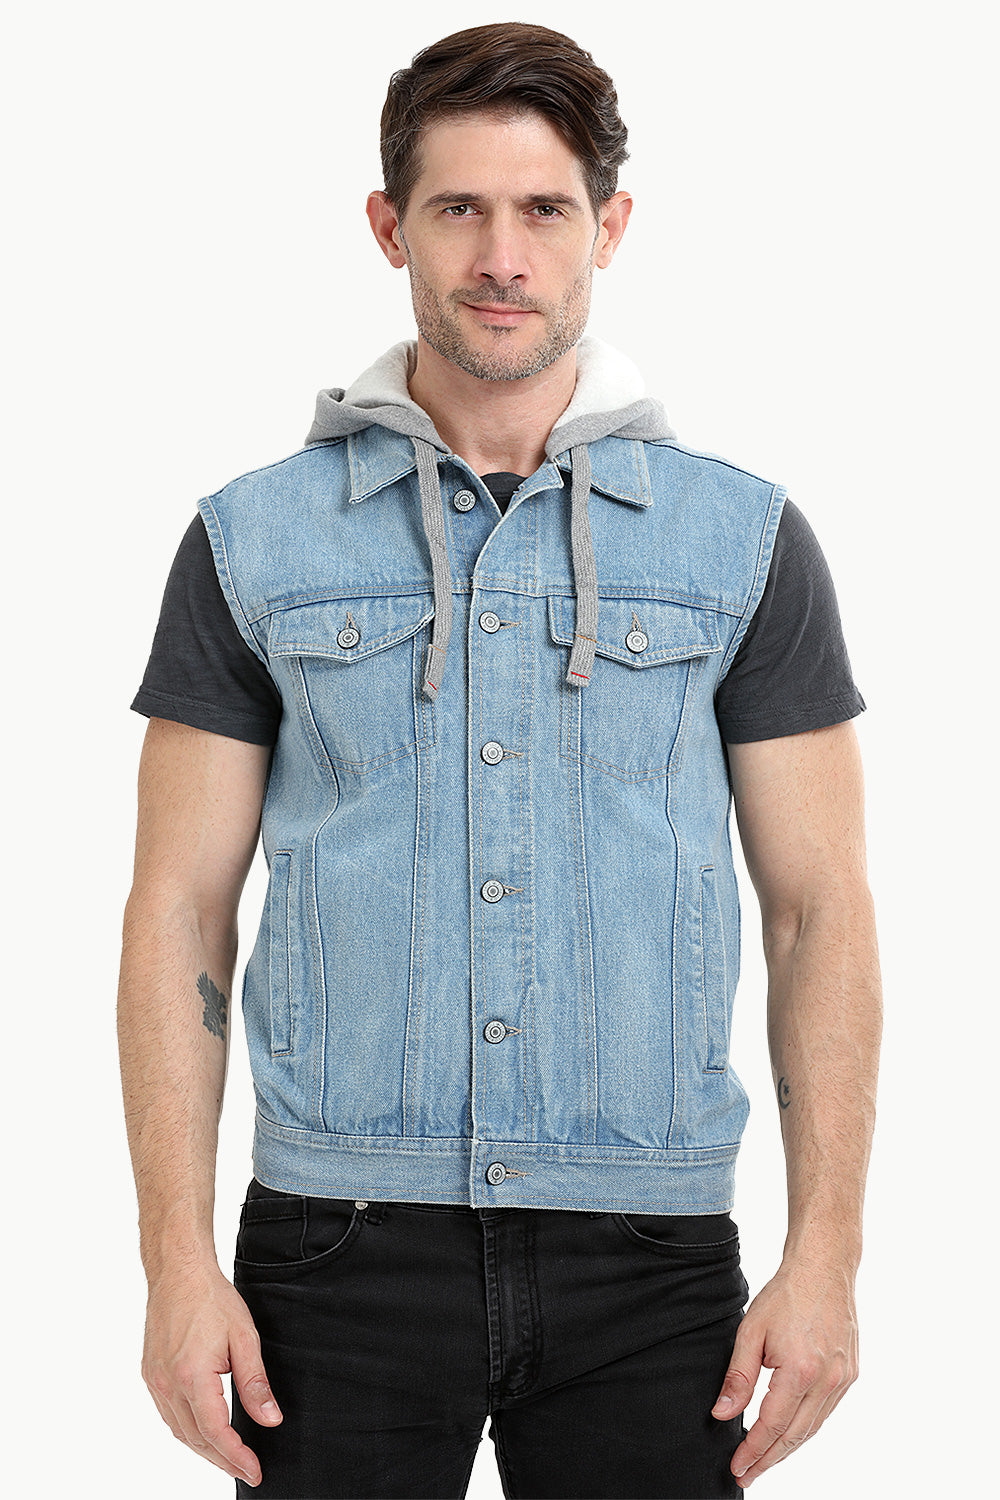 Yynuda Mens Lapel Vintage Solid Vest Classic Casual Sleeveless Denim Jacket   Fruugo IN